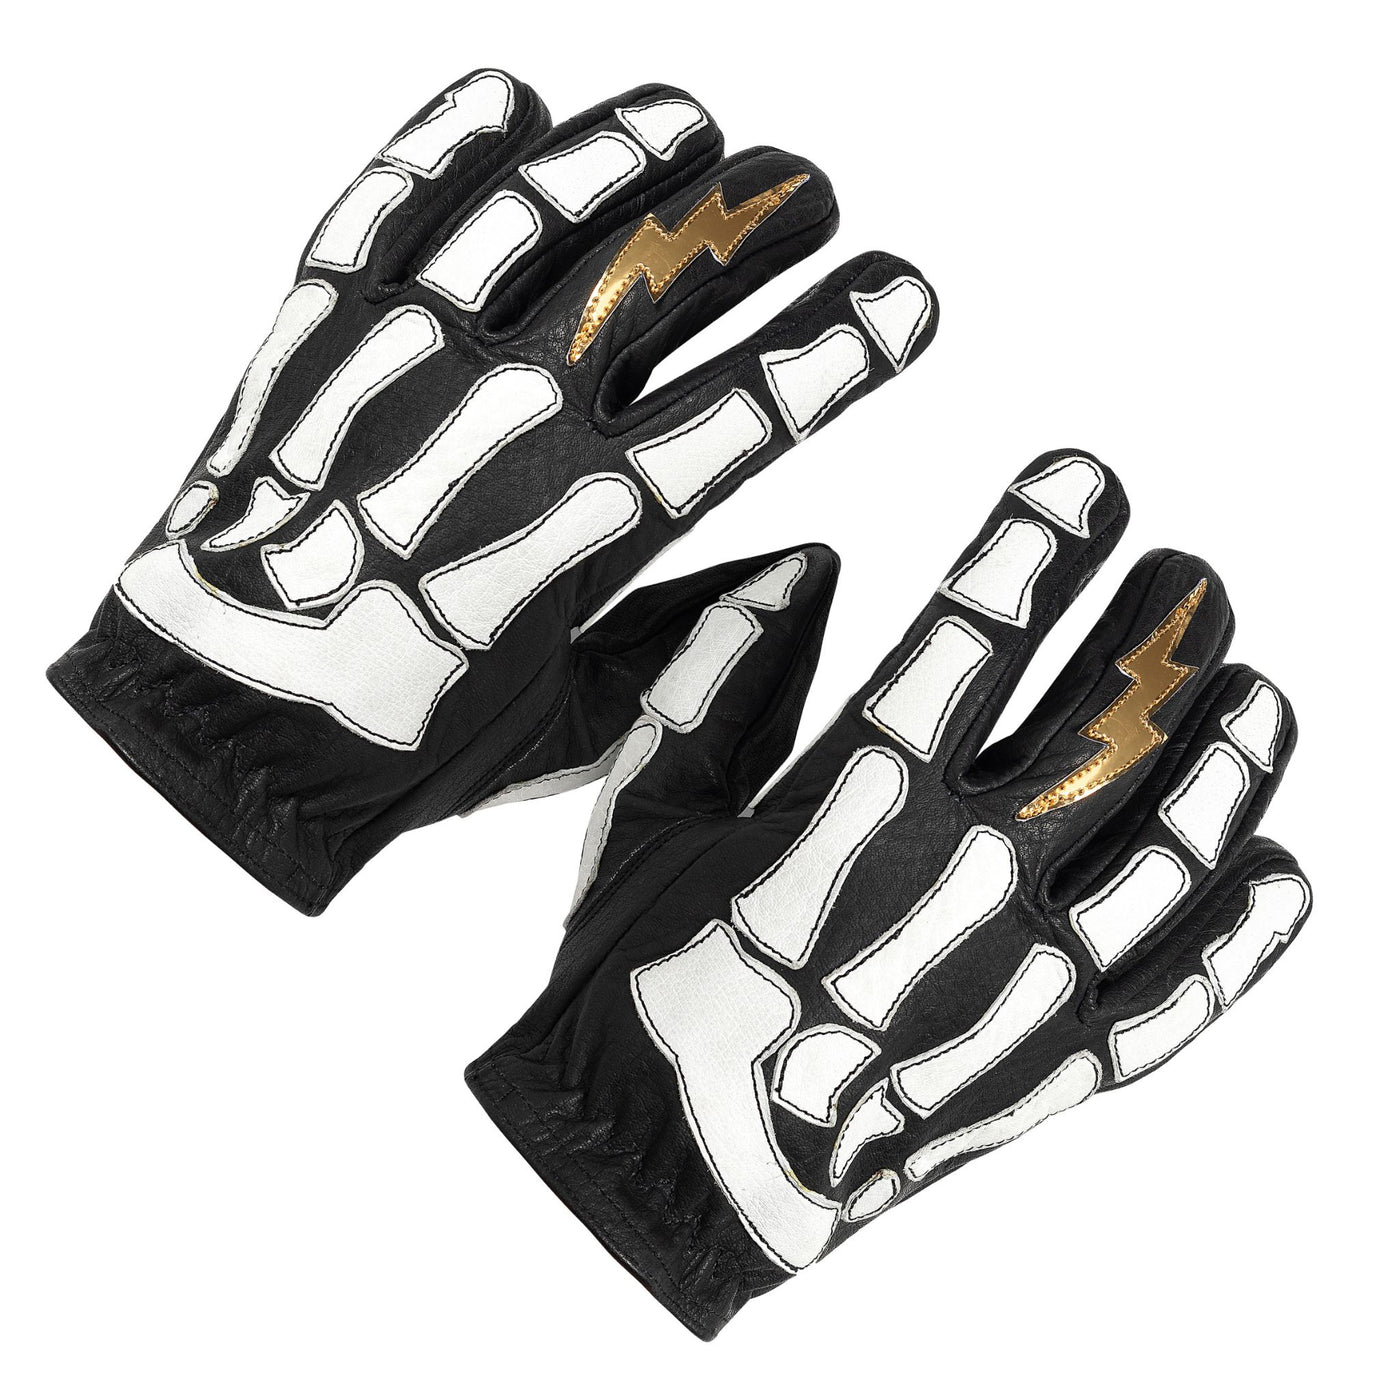 Astrapí (Lightning) Skeleton Leather Motorcycle Glove - Black-White